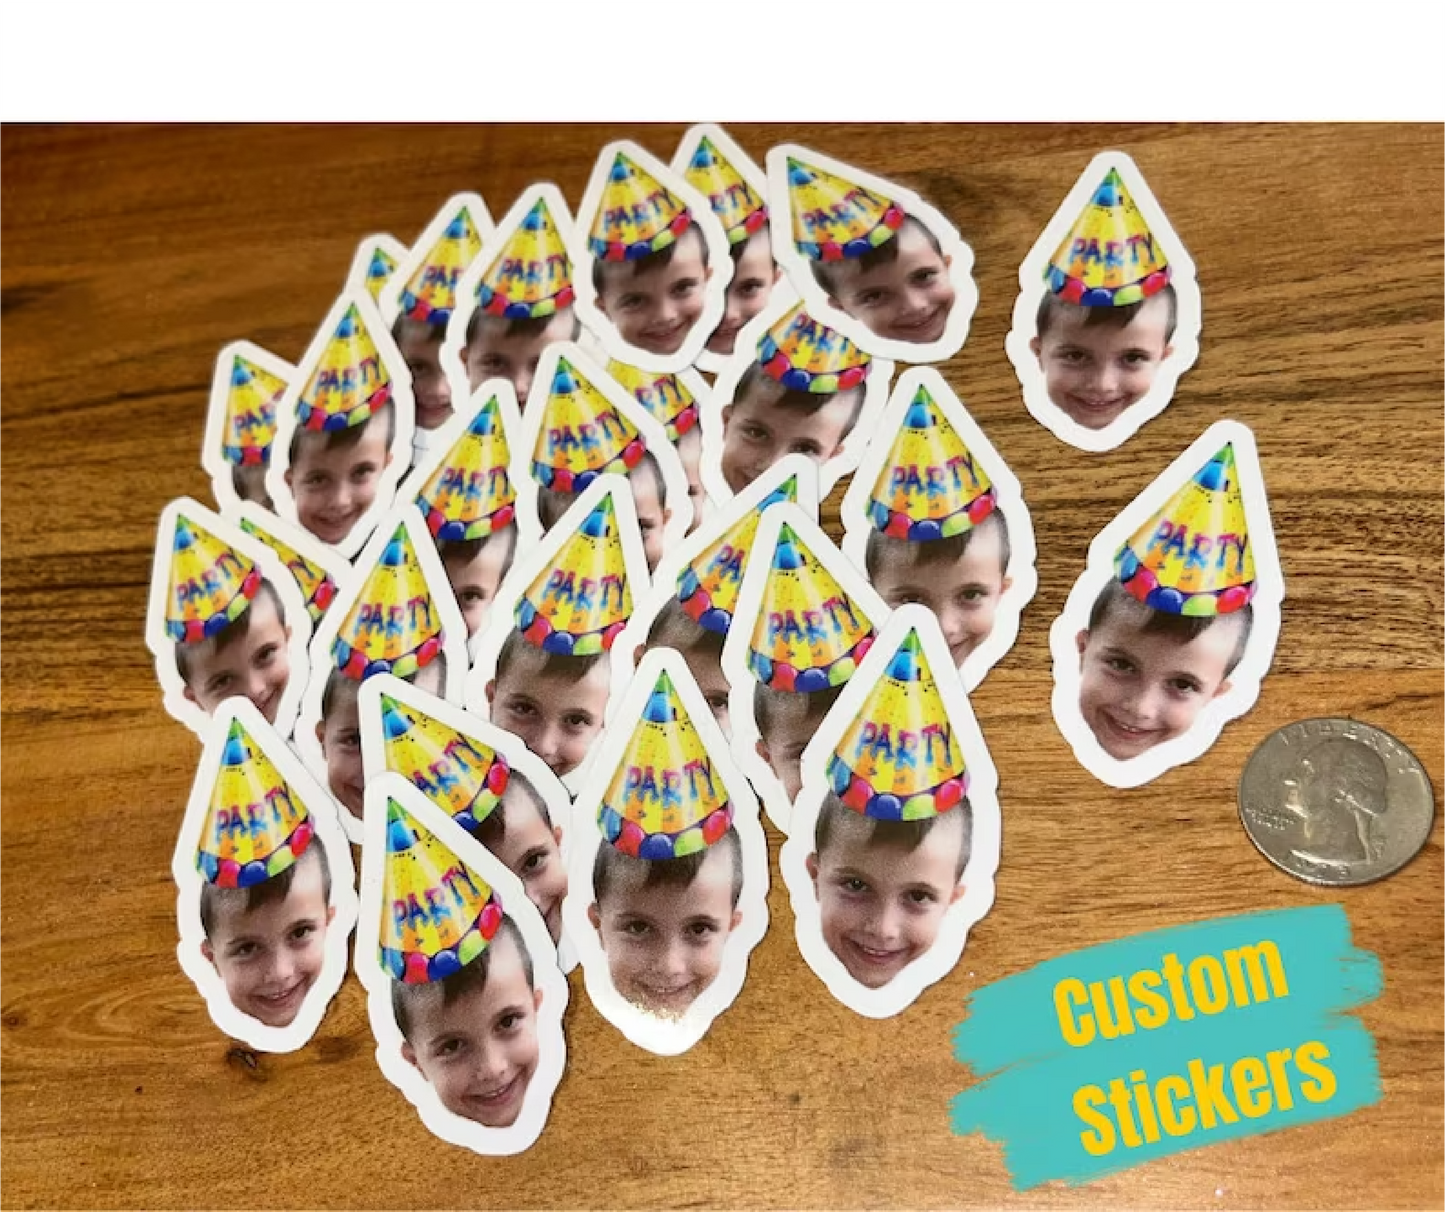 Custom Face Stickers